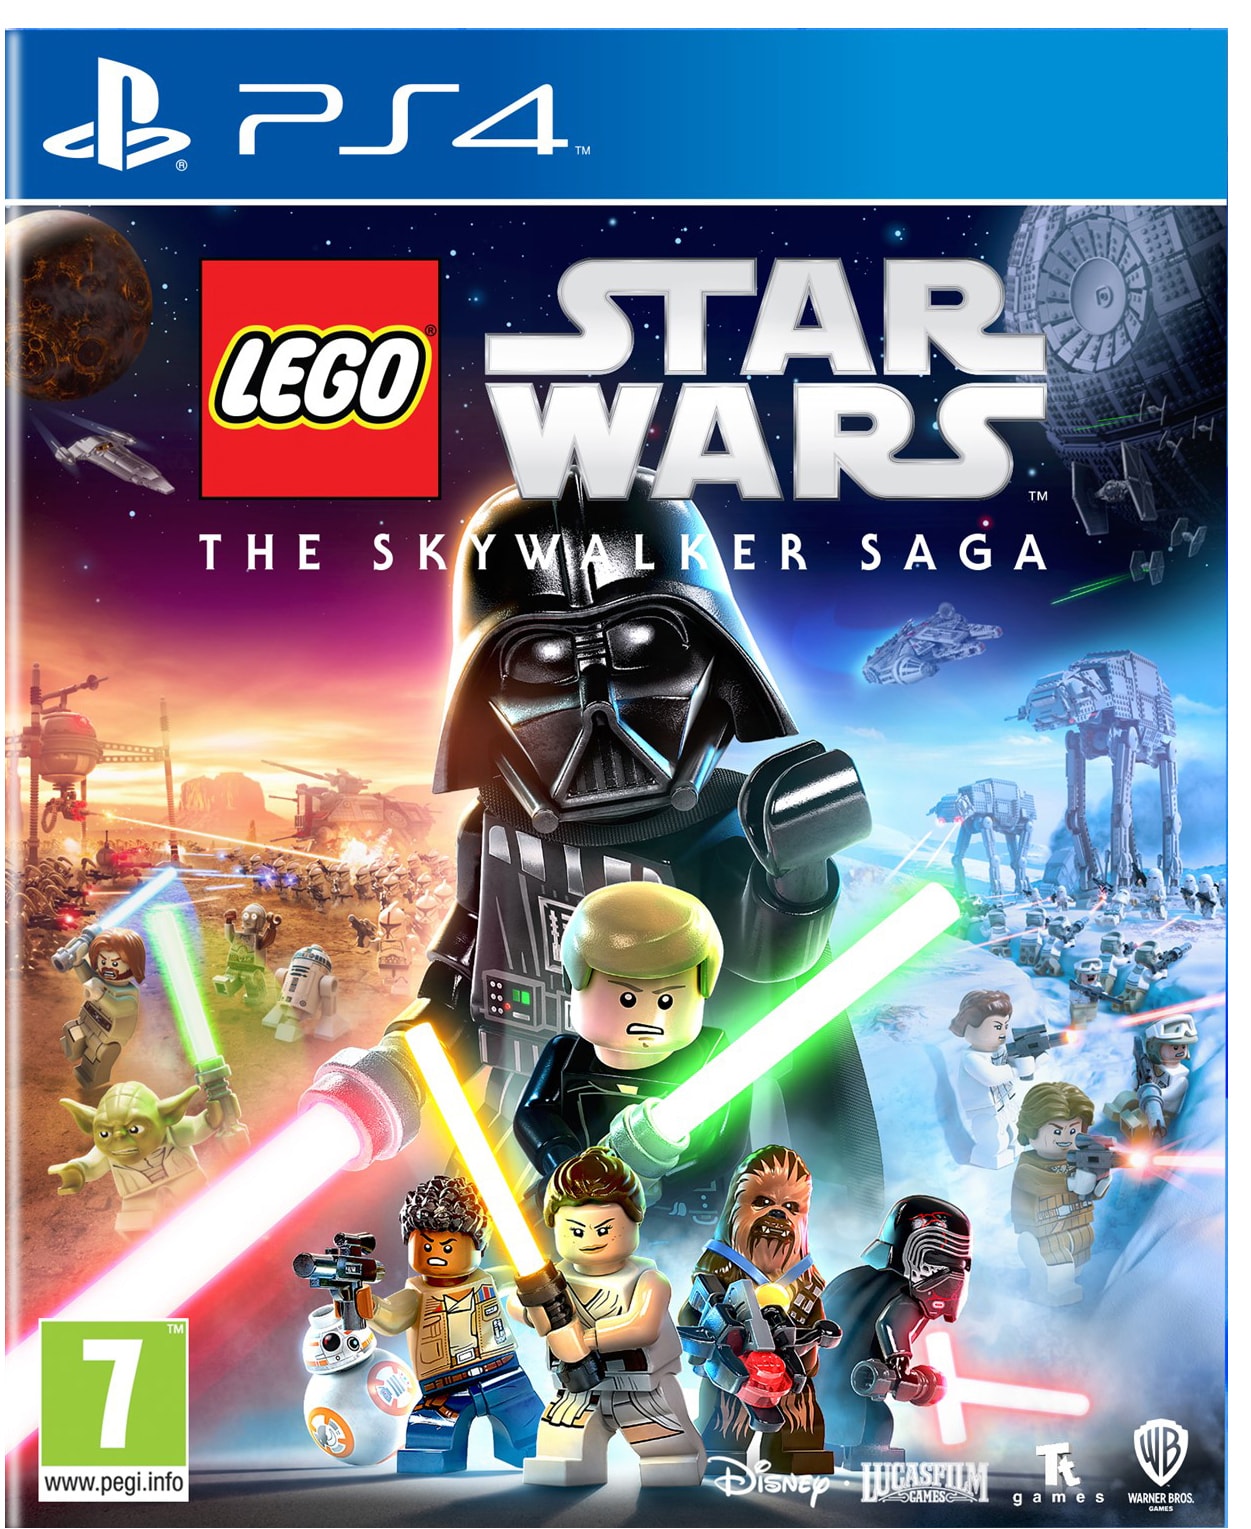 LEGO Star Wars The Skywalker Saga (PS4) - Elgiganten